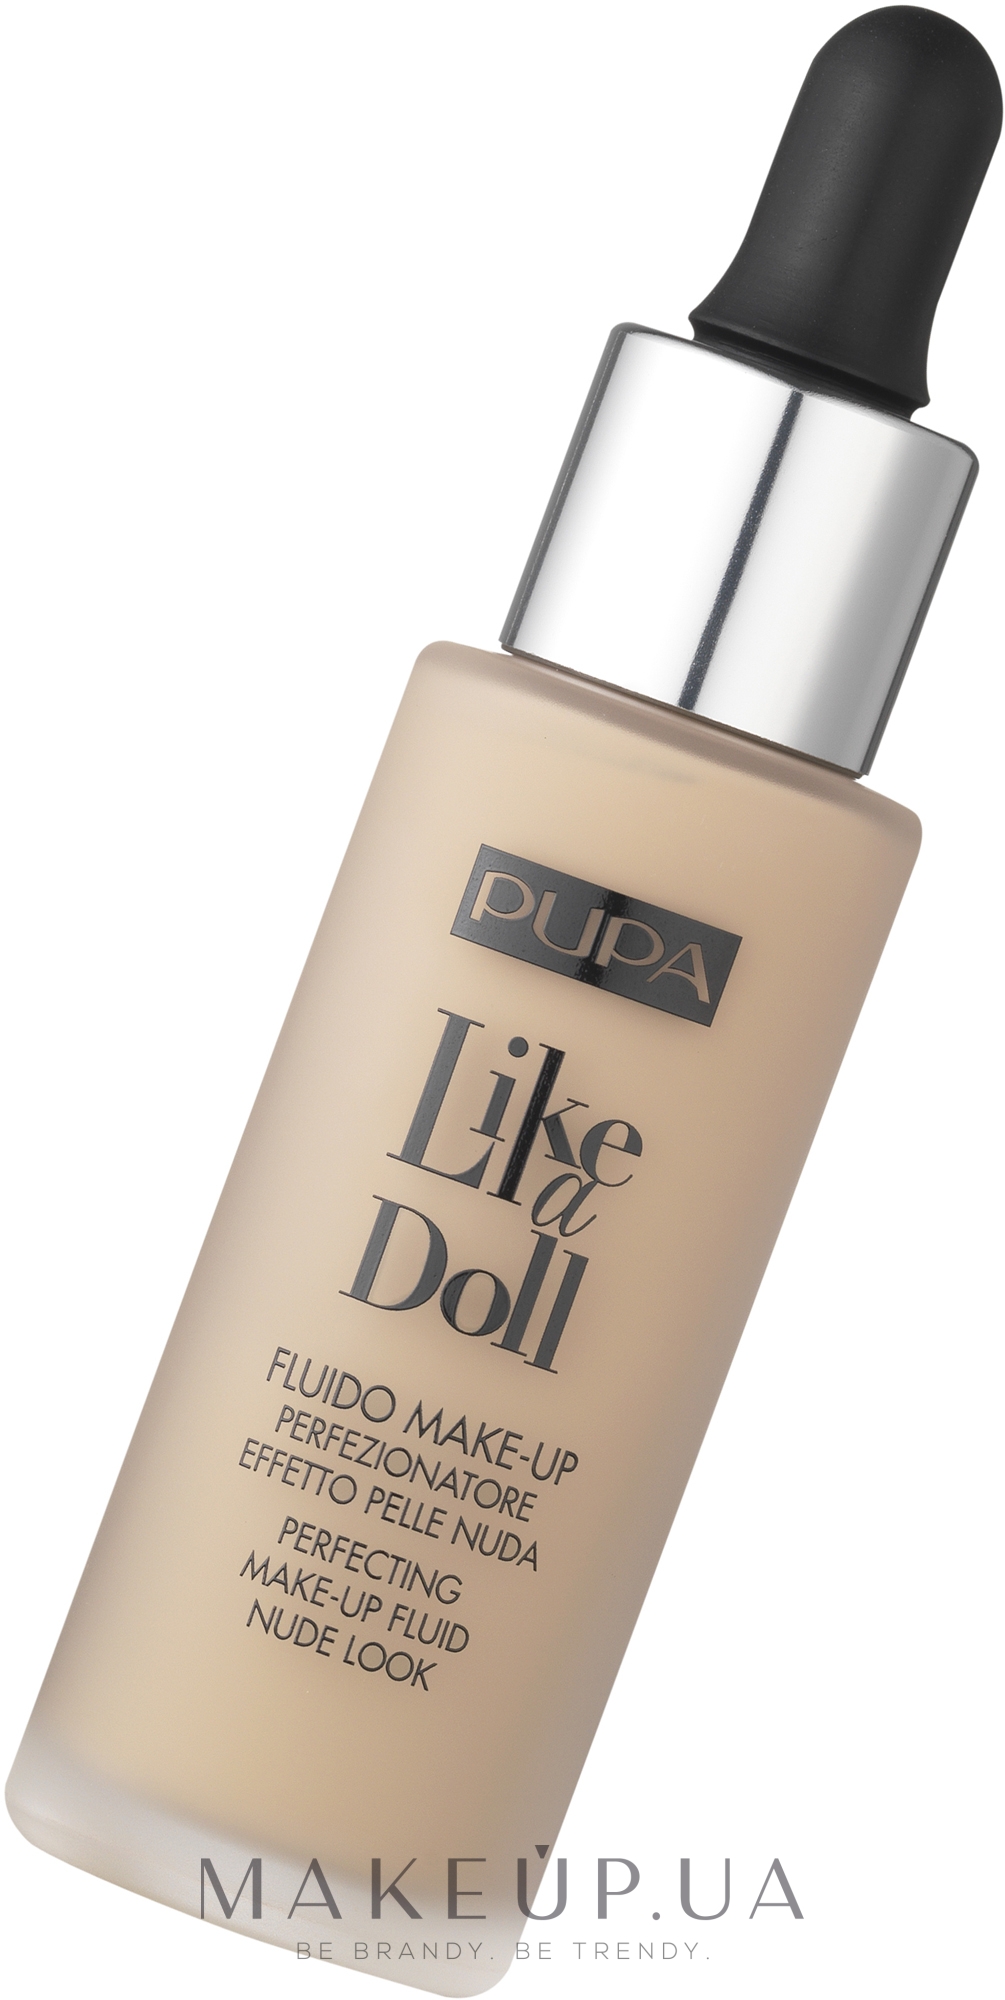 Рідка тональна основа - Pupa Like a Doll Perfecting Make-up Fluid Nude Look — фото 010 - Для очень светлой кожи